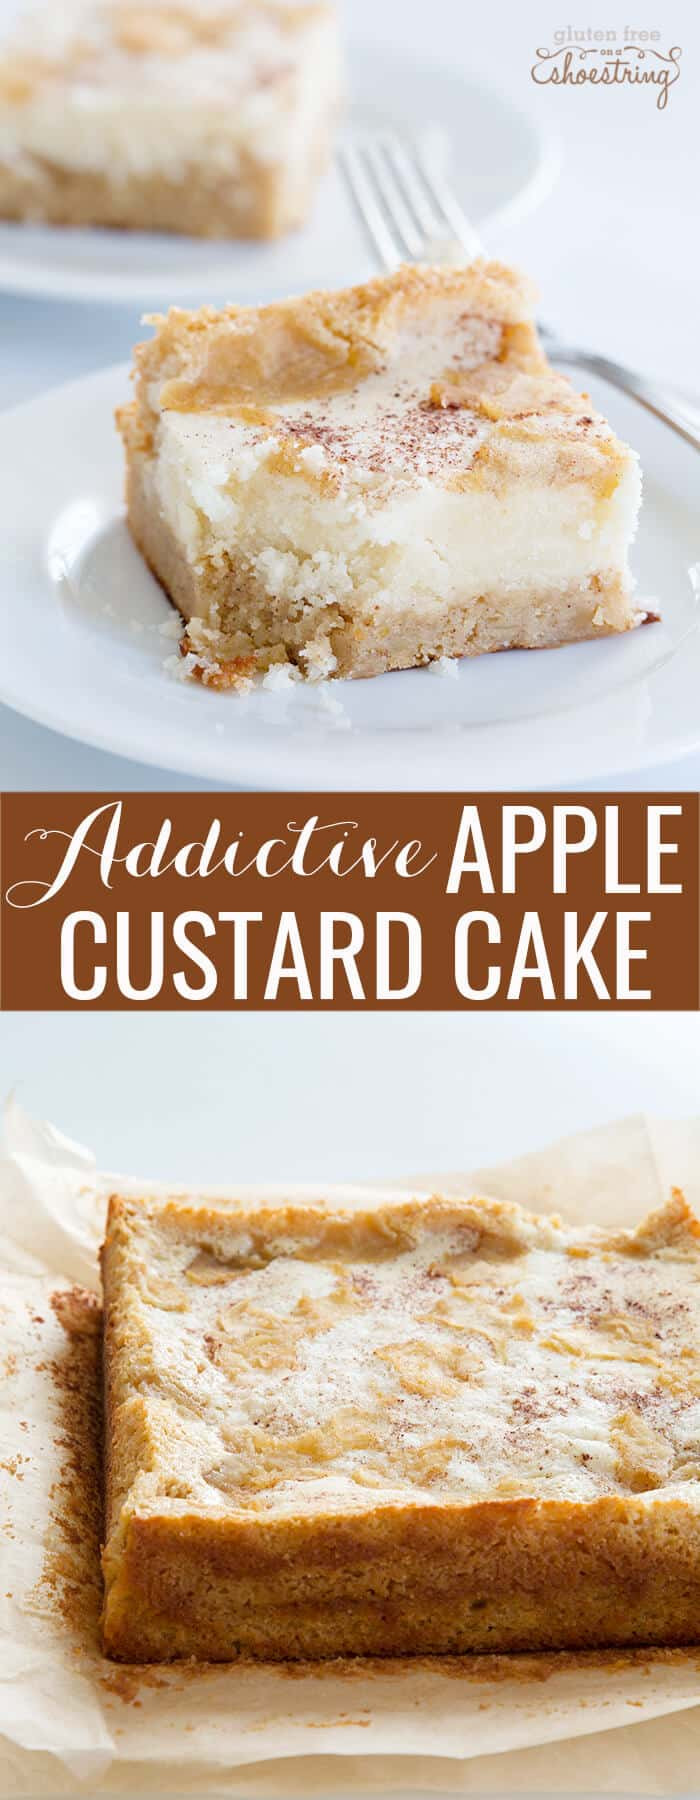 Gluten Free Apple Cake Recipe
 Easy Gluten Free Apple Custard Cake ⋆ Great gluten free